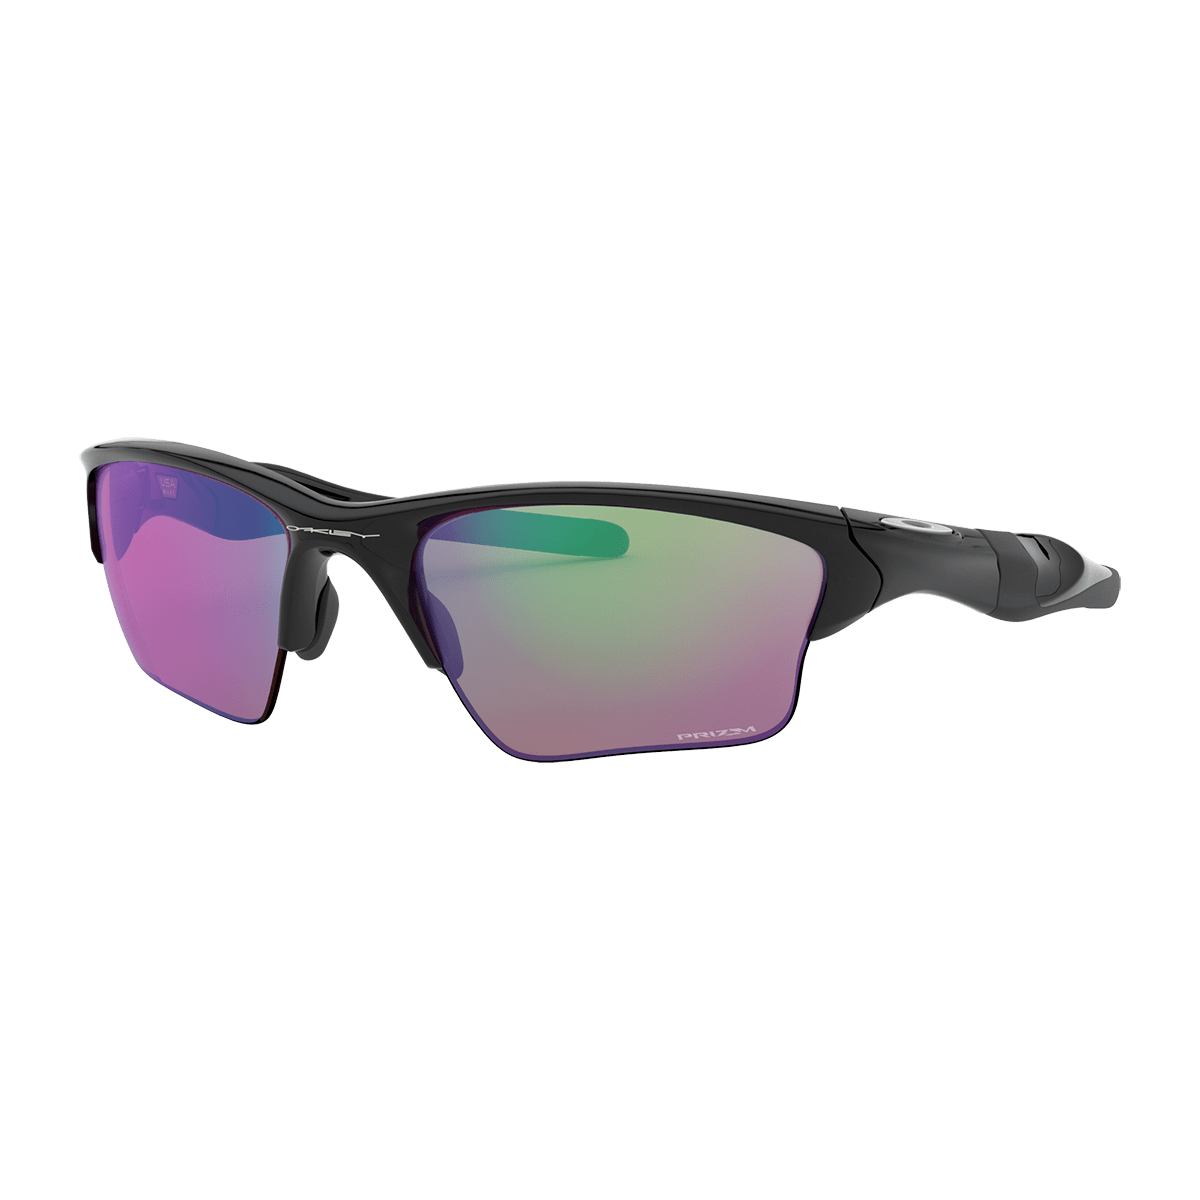 oakley prizm sunglasses price